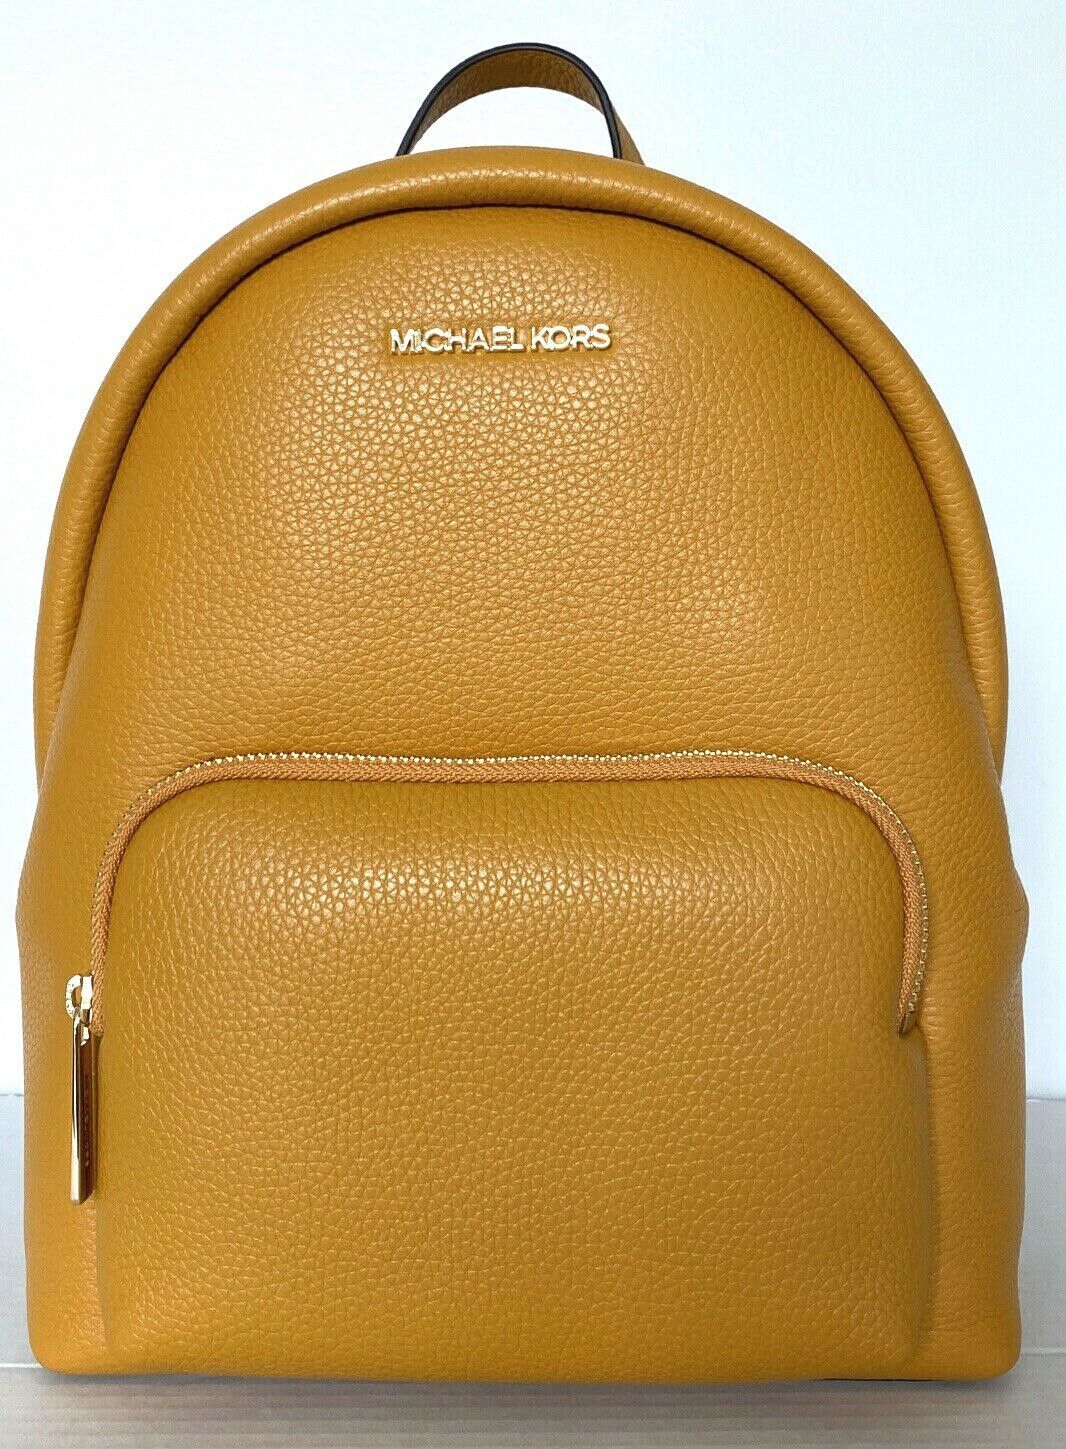 New Michael Kors Erin Medium Backpack Pebble Leather Marigold with Dust bag